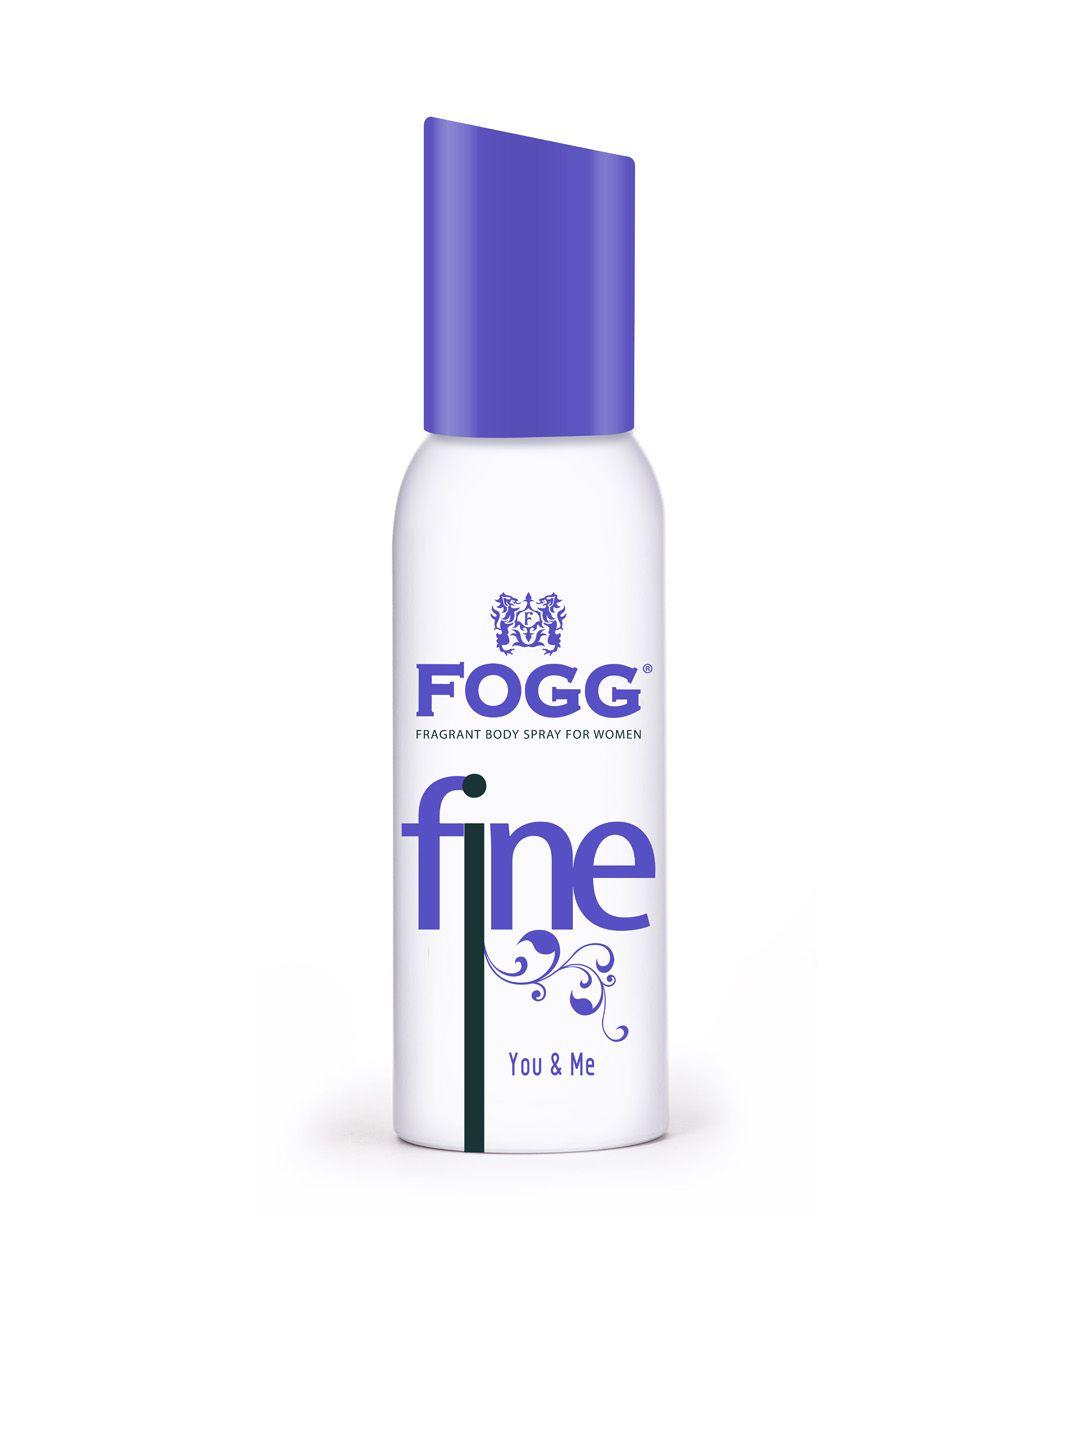 fogg women fine you & me fragrant body spray 120 ml